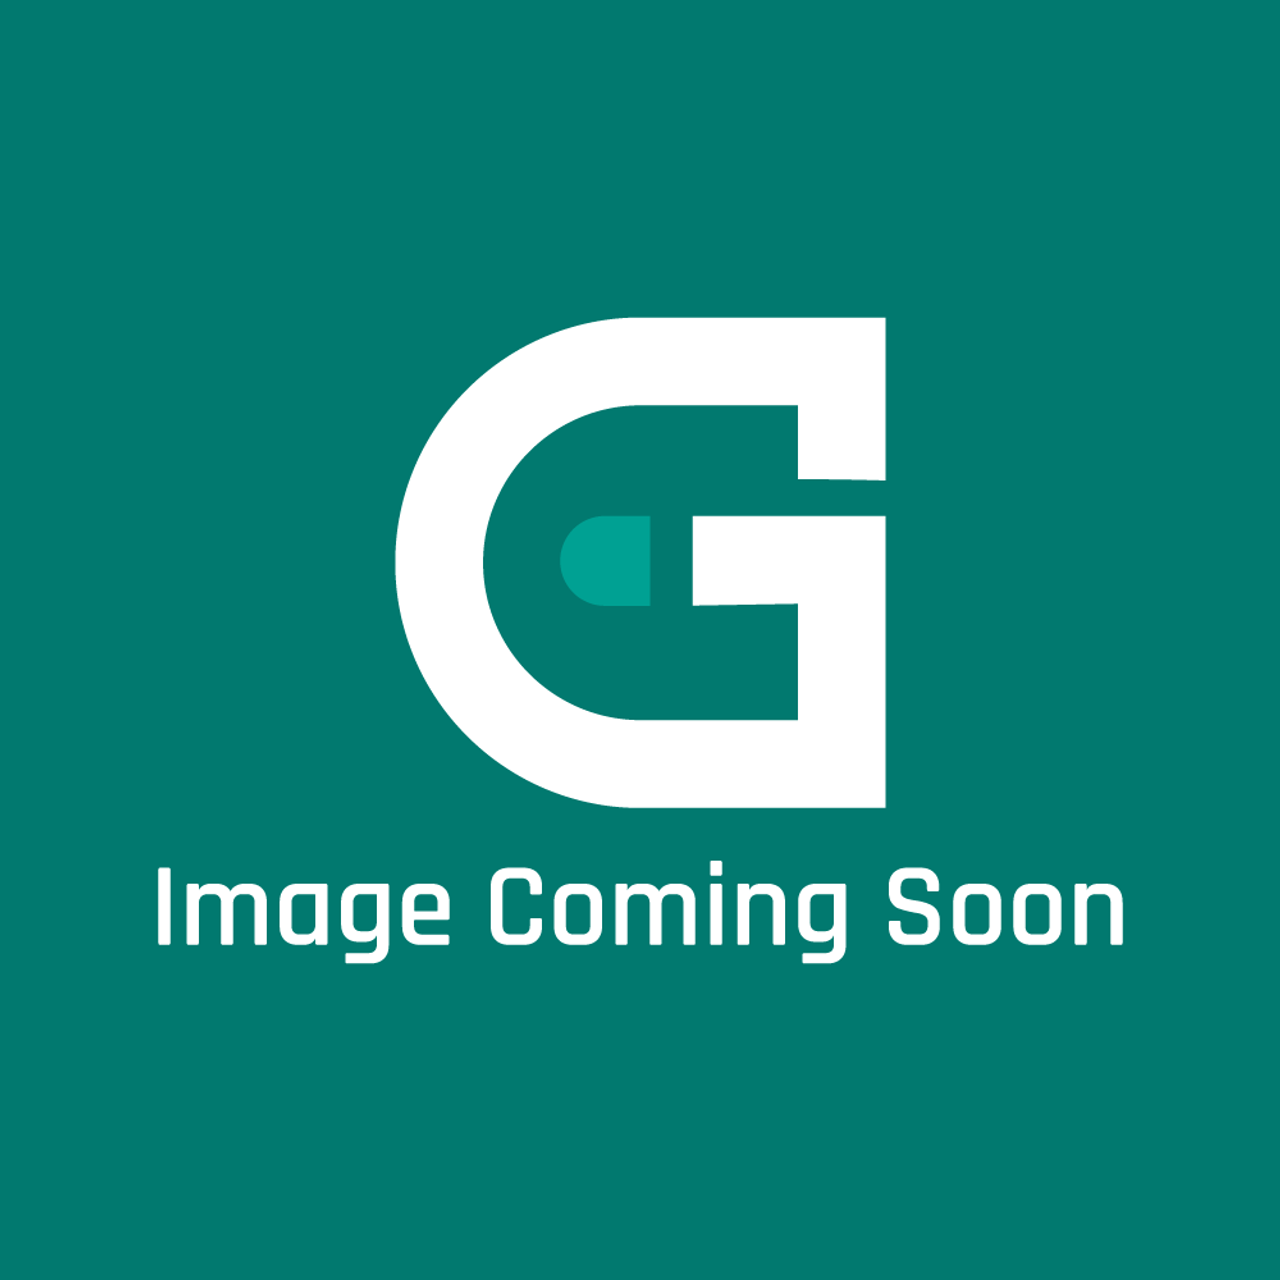 GE Appliances WR74X10356 - Toe Kick - Image Coming Soon!